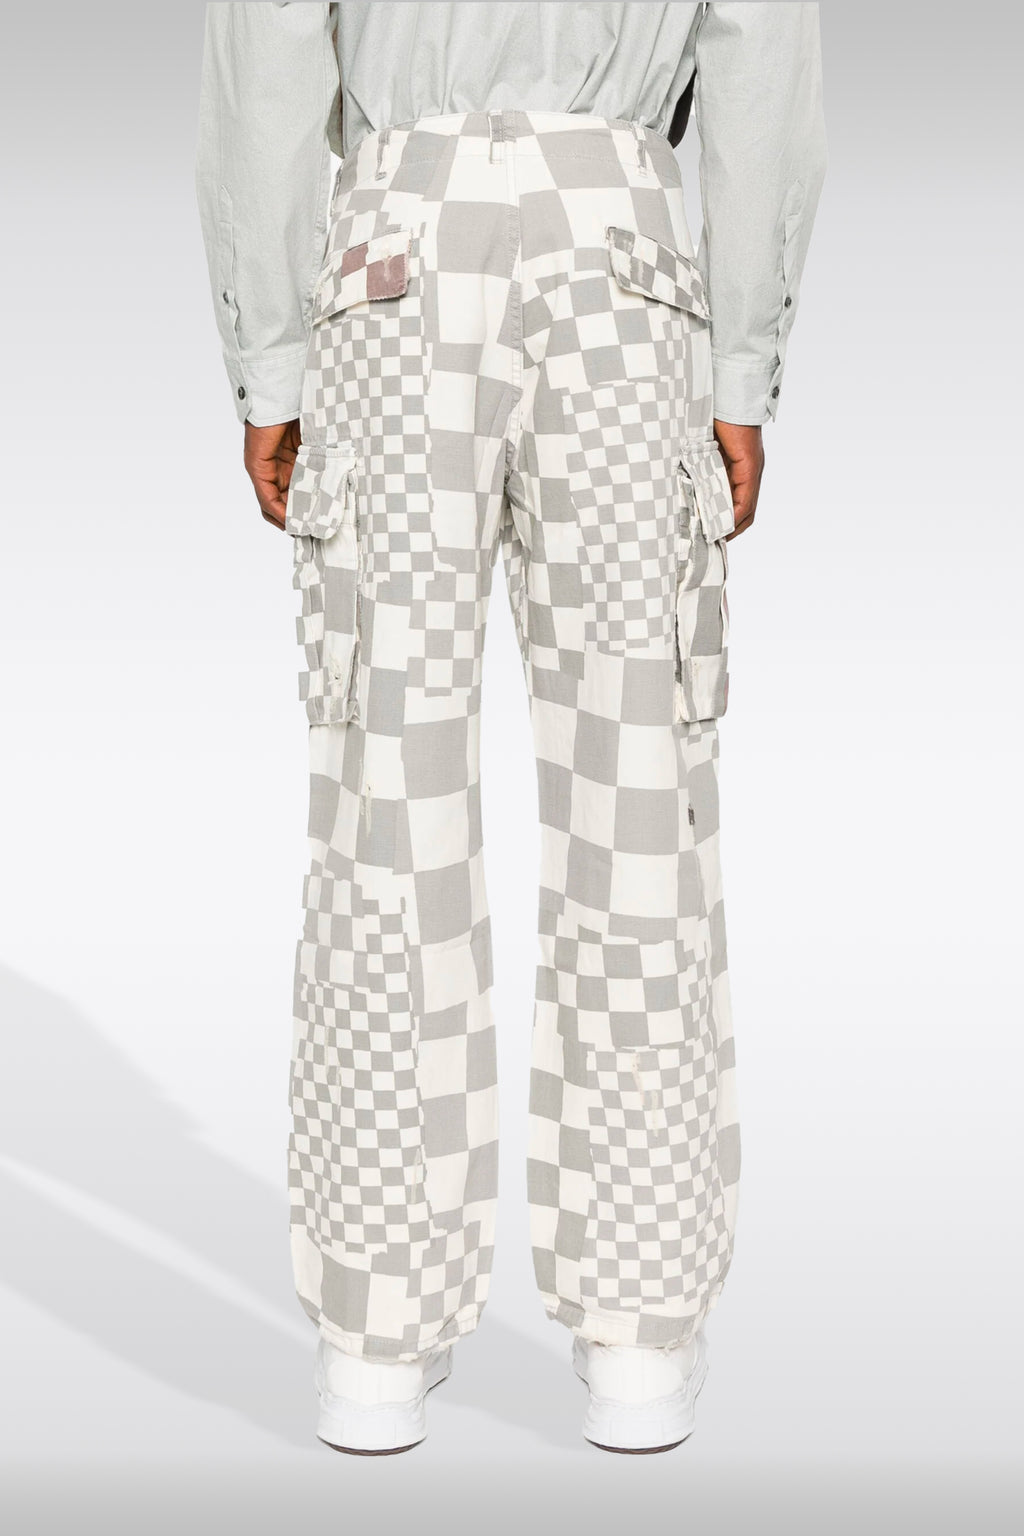 alt-image__Pantalone-cargo-in-cotone-a-scacchi-bianco/grigio---Unisex-Printed-Cargo-Pants-Woven